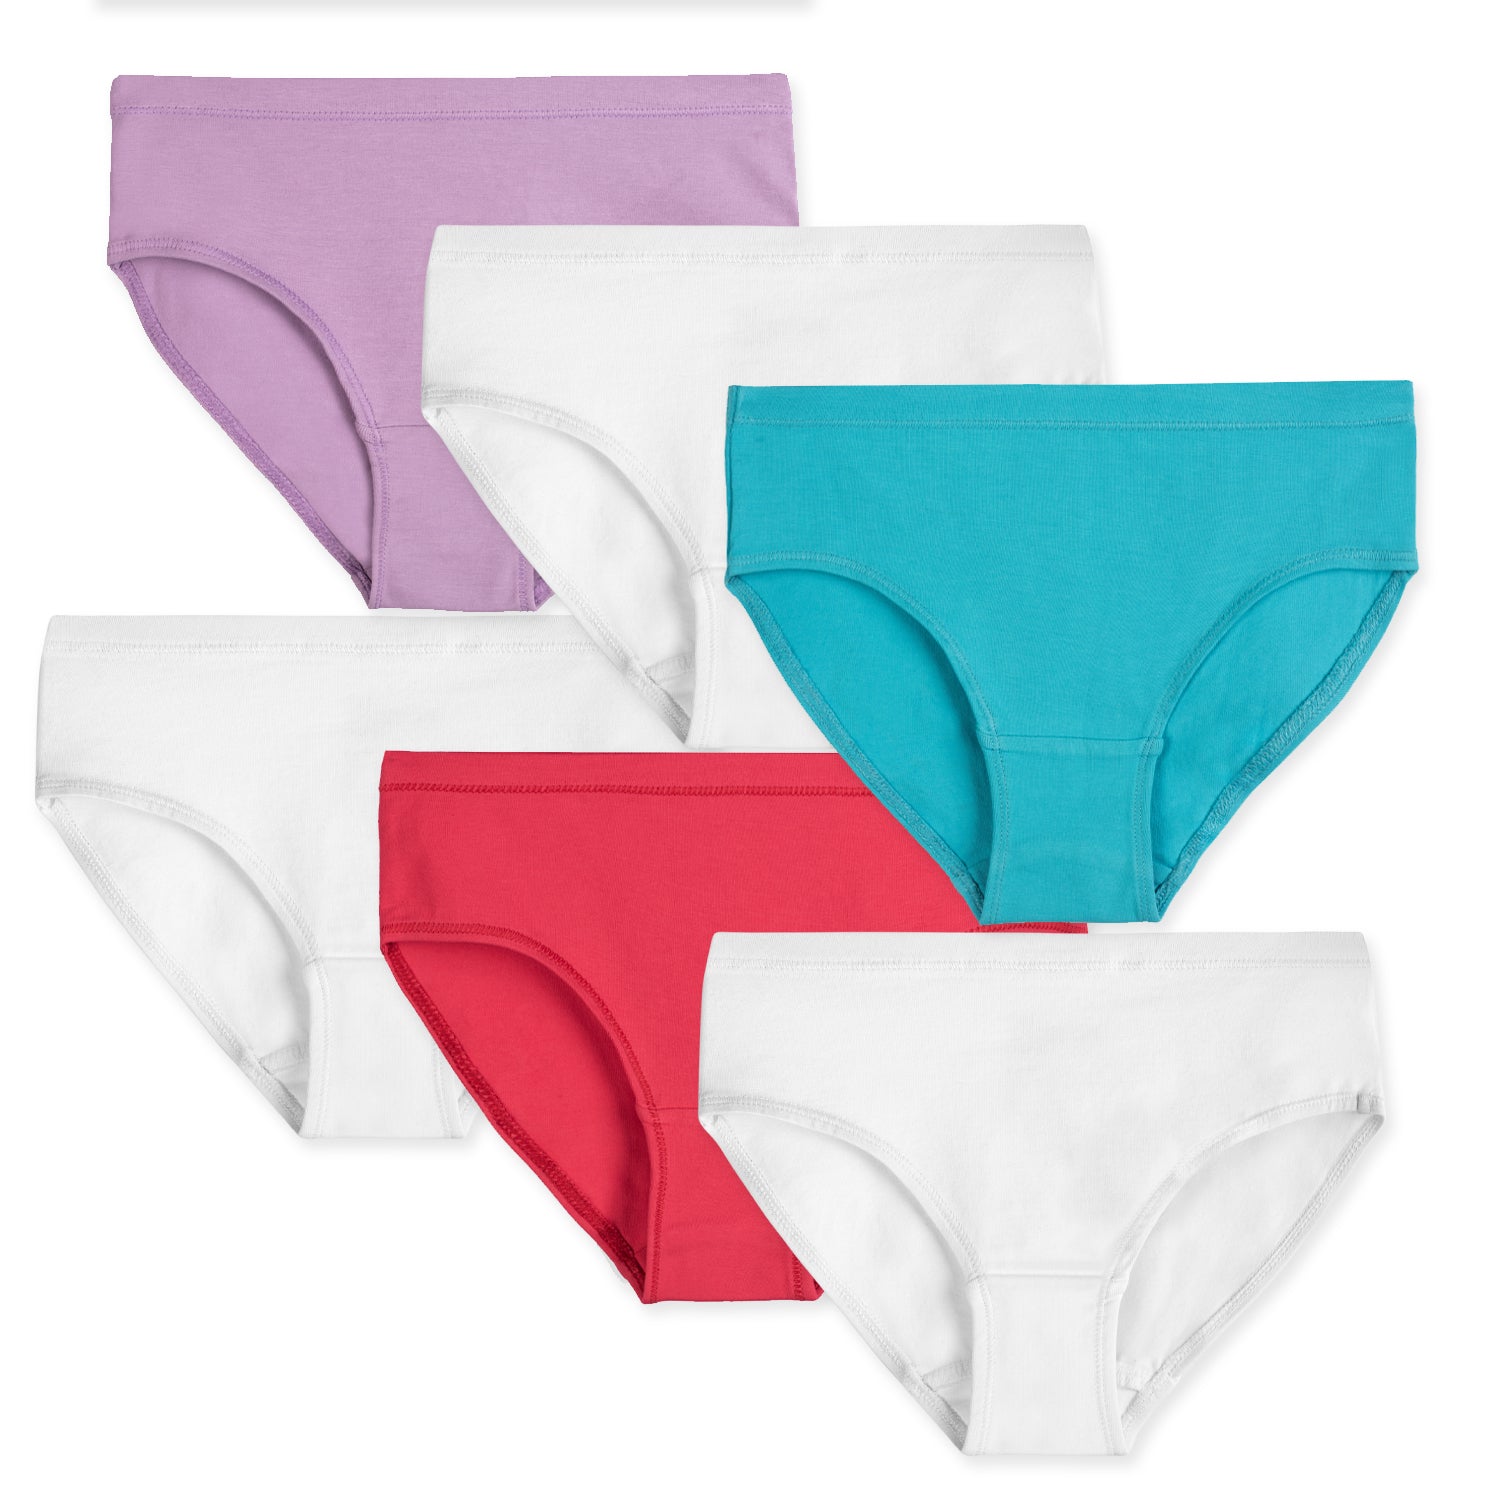 Organic Cotton Girls Underwear 3-Pack by Zoocchini